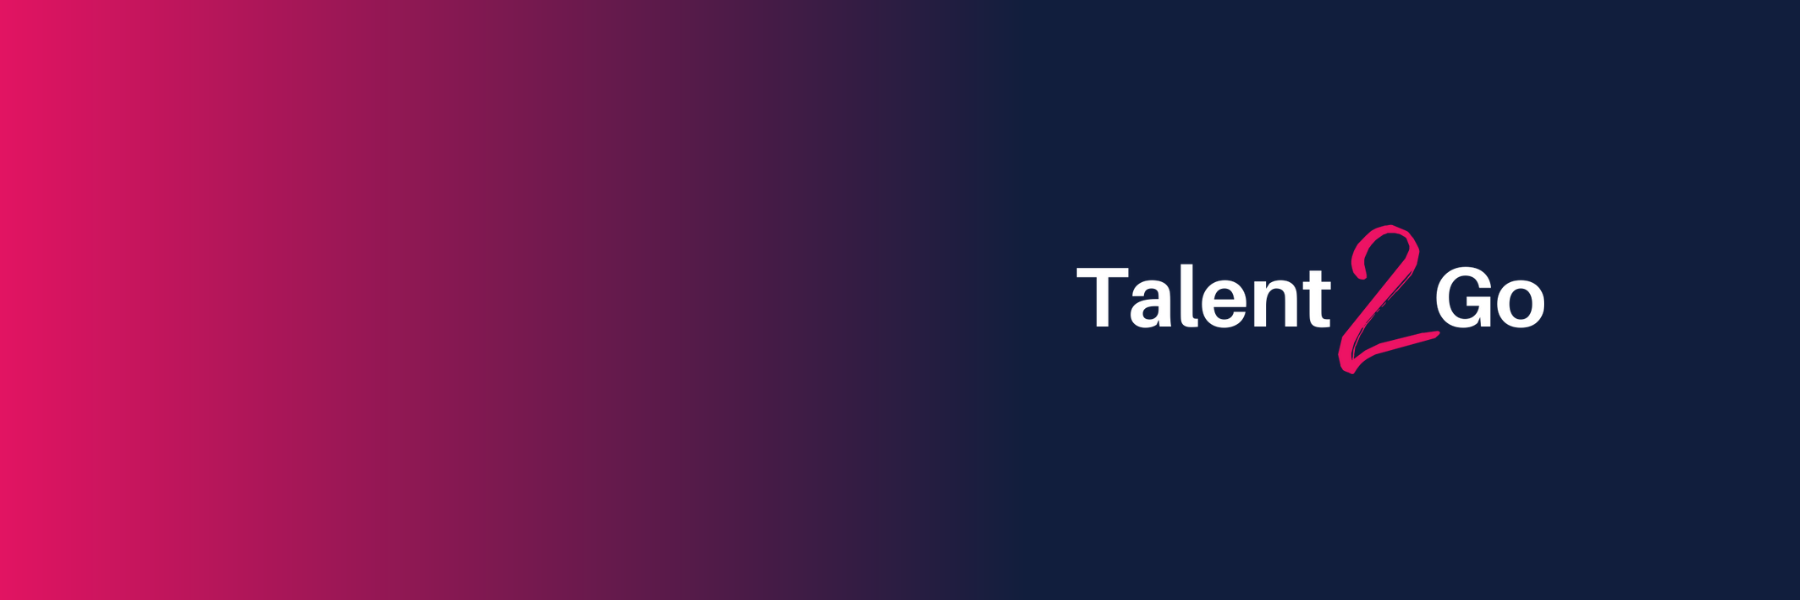 Talent2Go / startup from Landau / Background